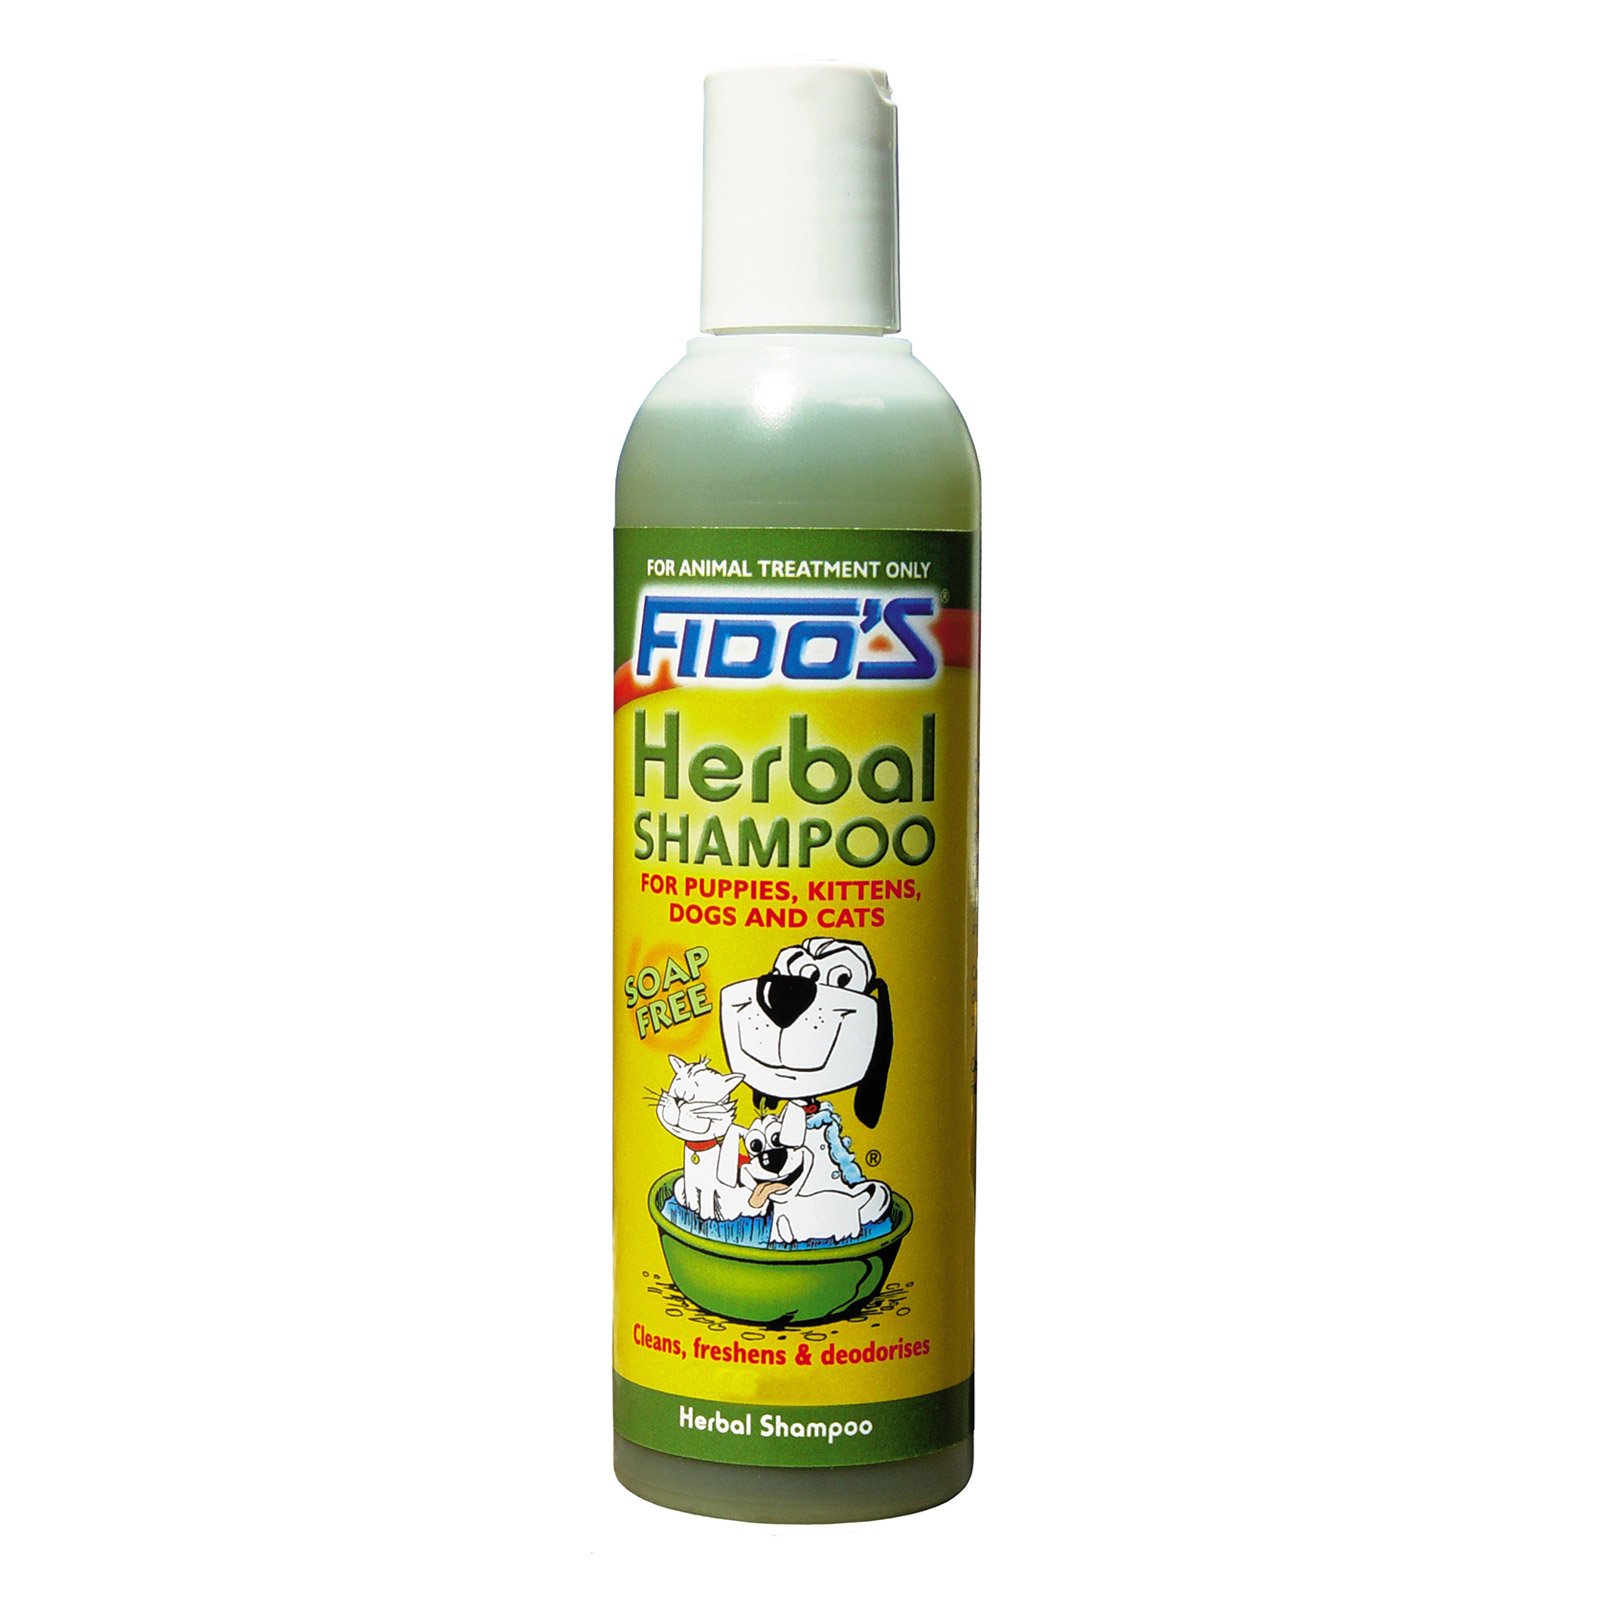 Fido's Herbal Shampoo